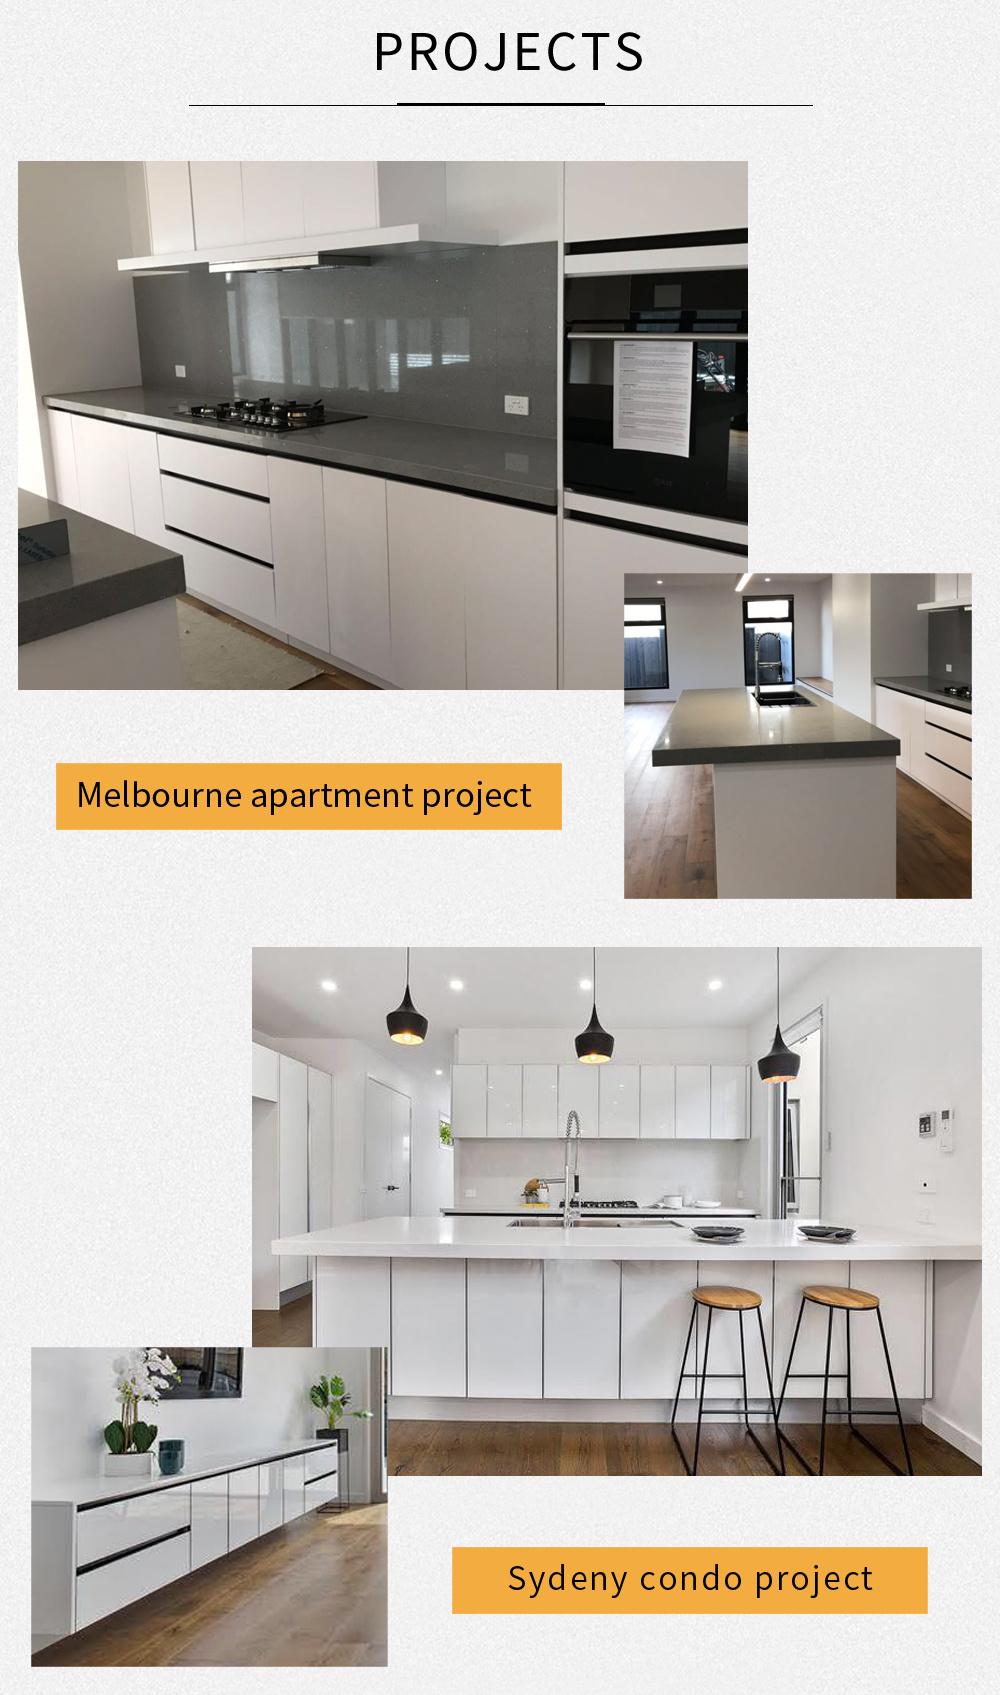 Wholesale 2021 New Arrivals Home Decor Material Black Matt Modern Designs Kitchen Furniture Cabinet